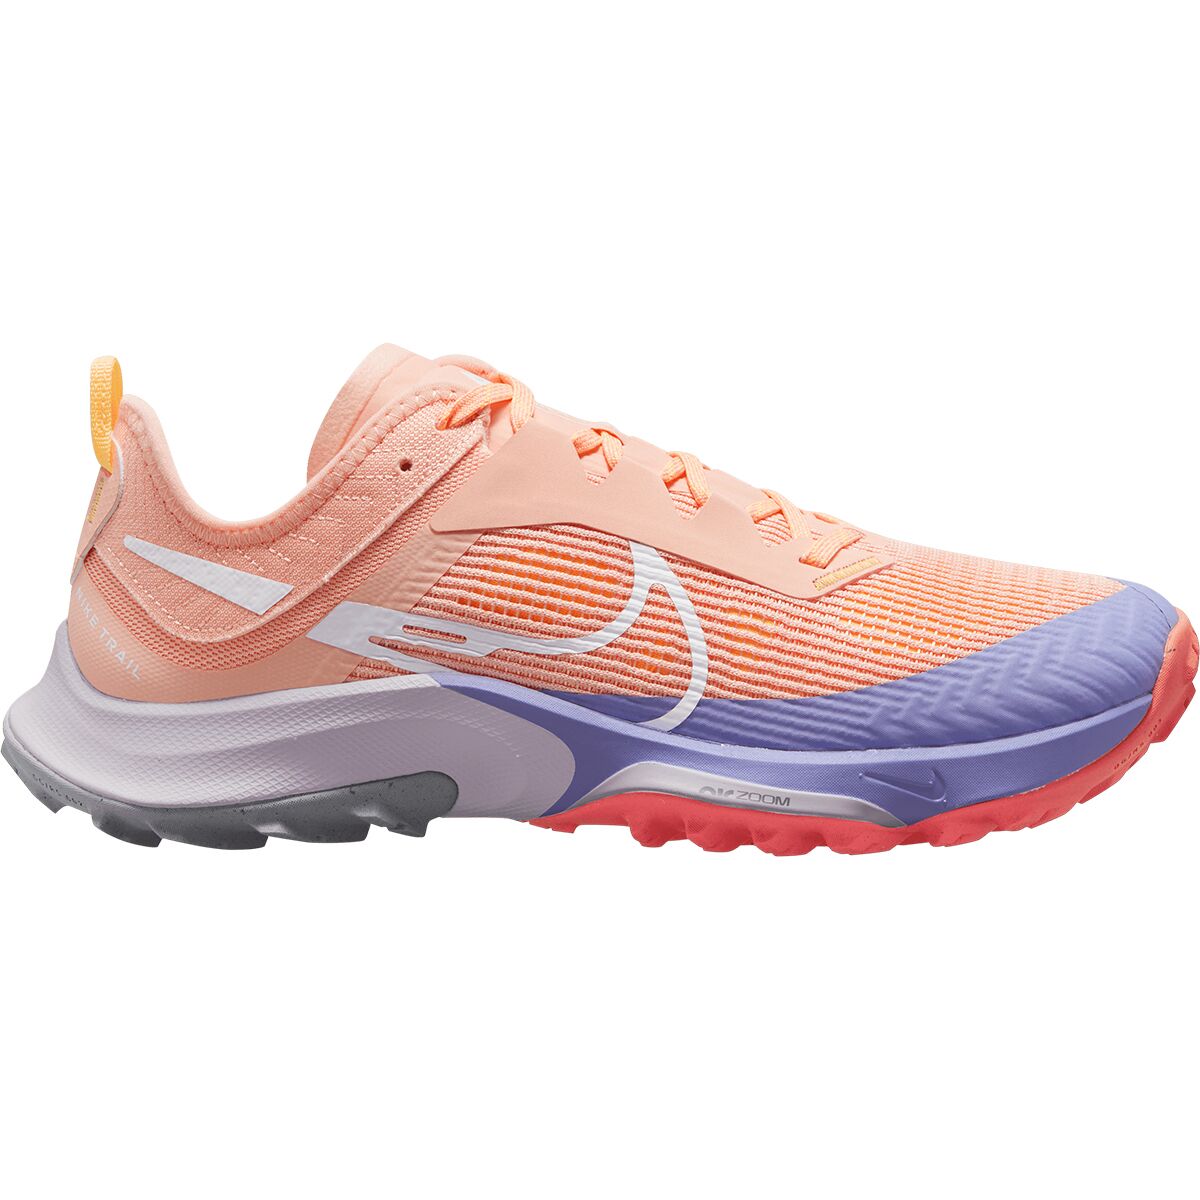 Nike Air Zoom Terra Kiger 8 Trail Running Shoe - Women's